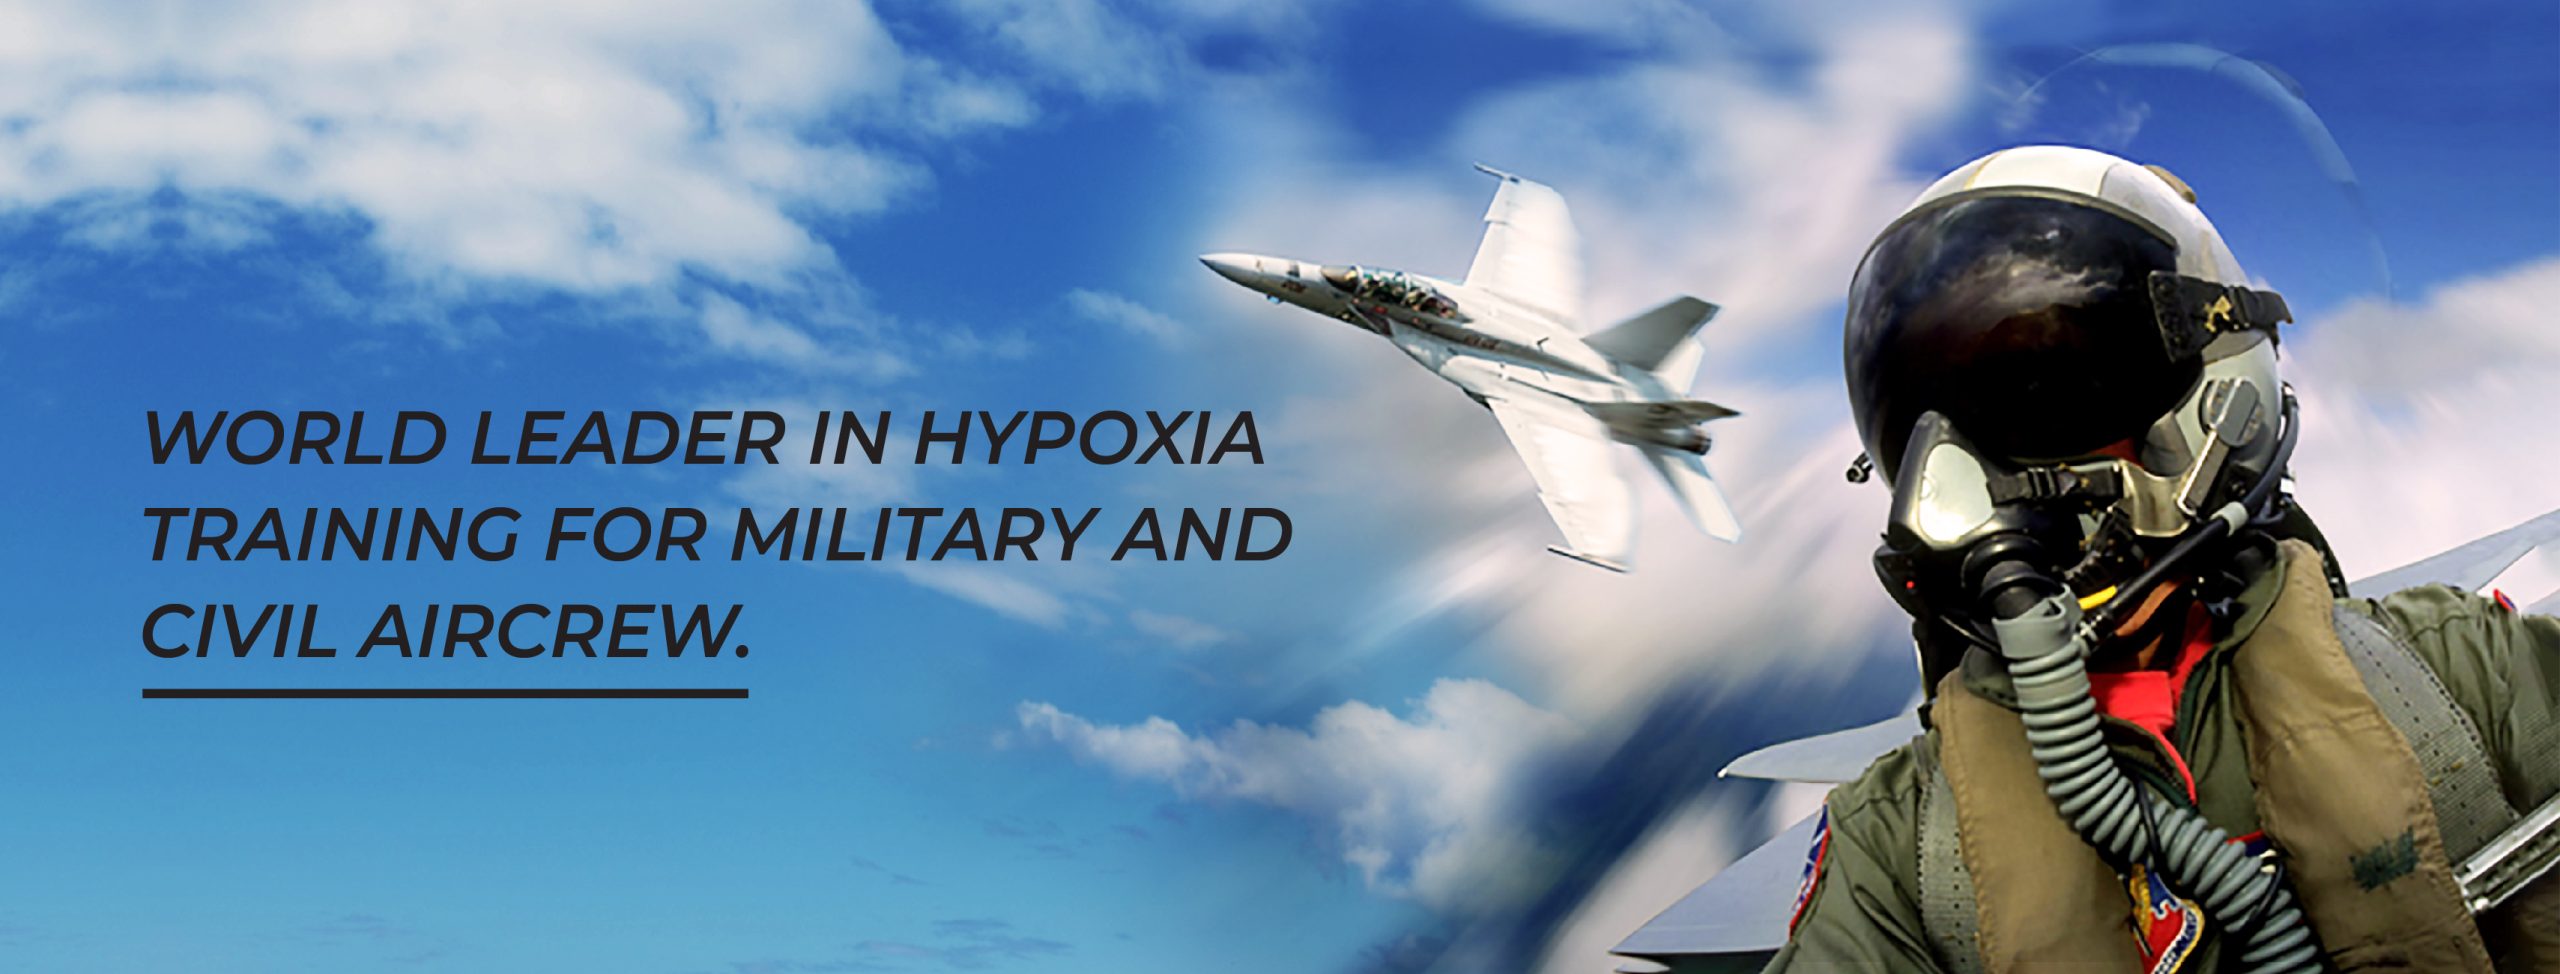 hypoxic training military civil aircrew